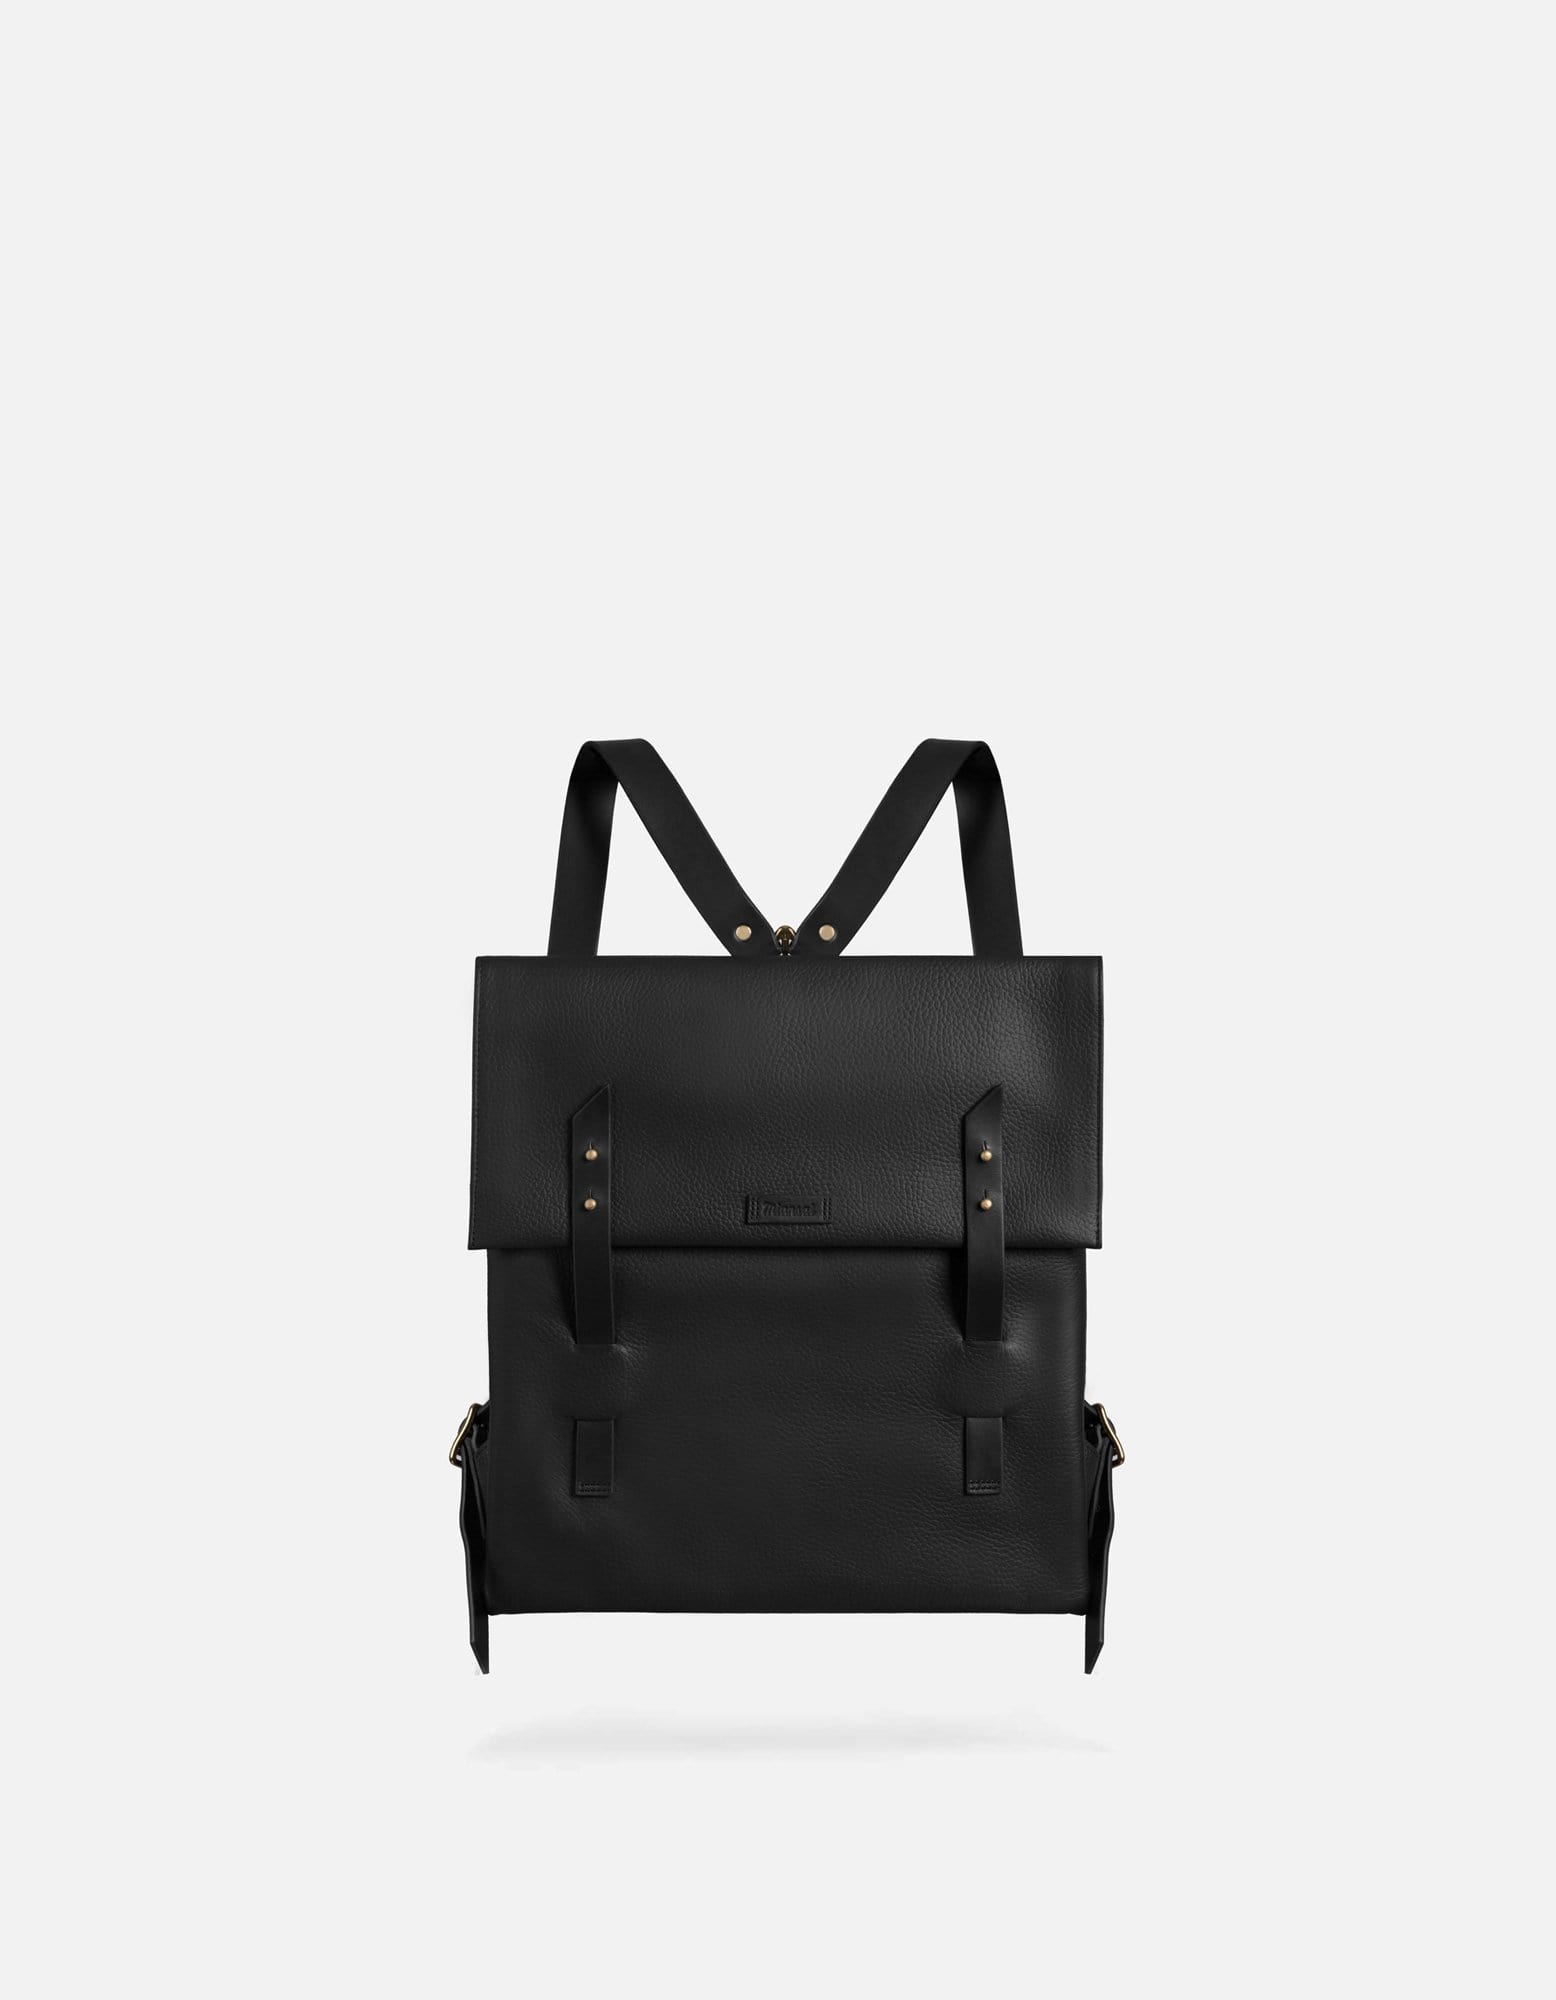 Santon Backpack, Textured Black | Men's Leather Bags | Miansai